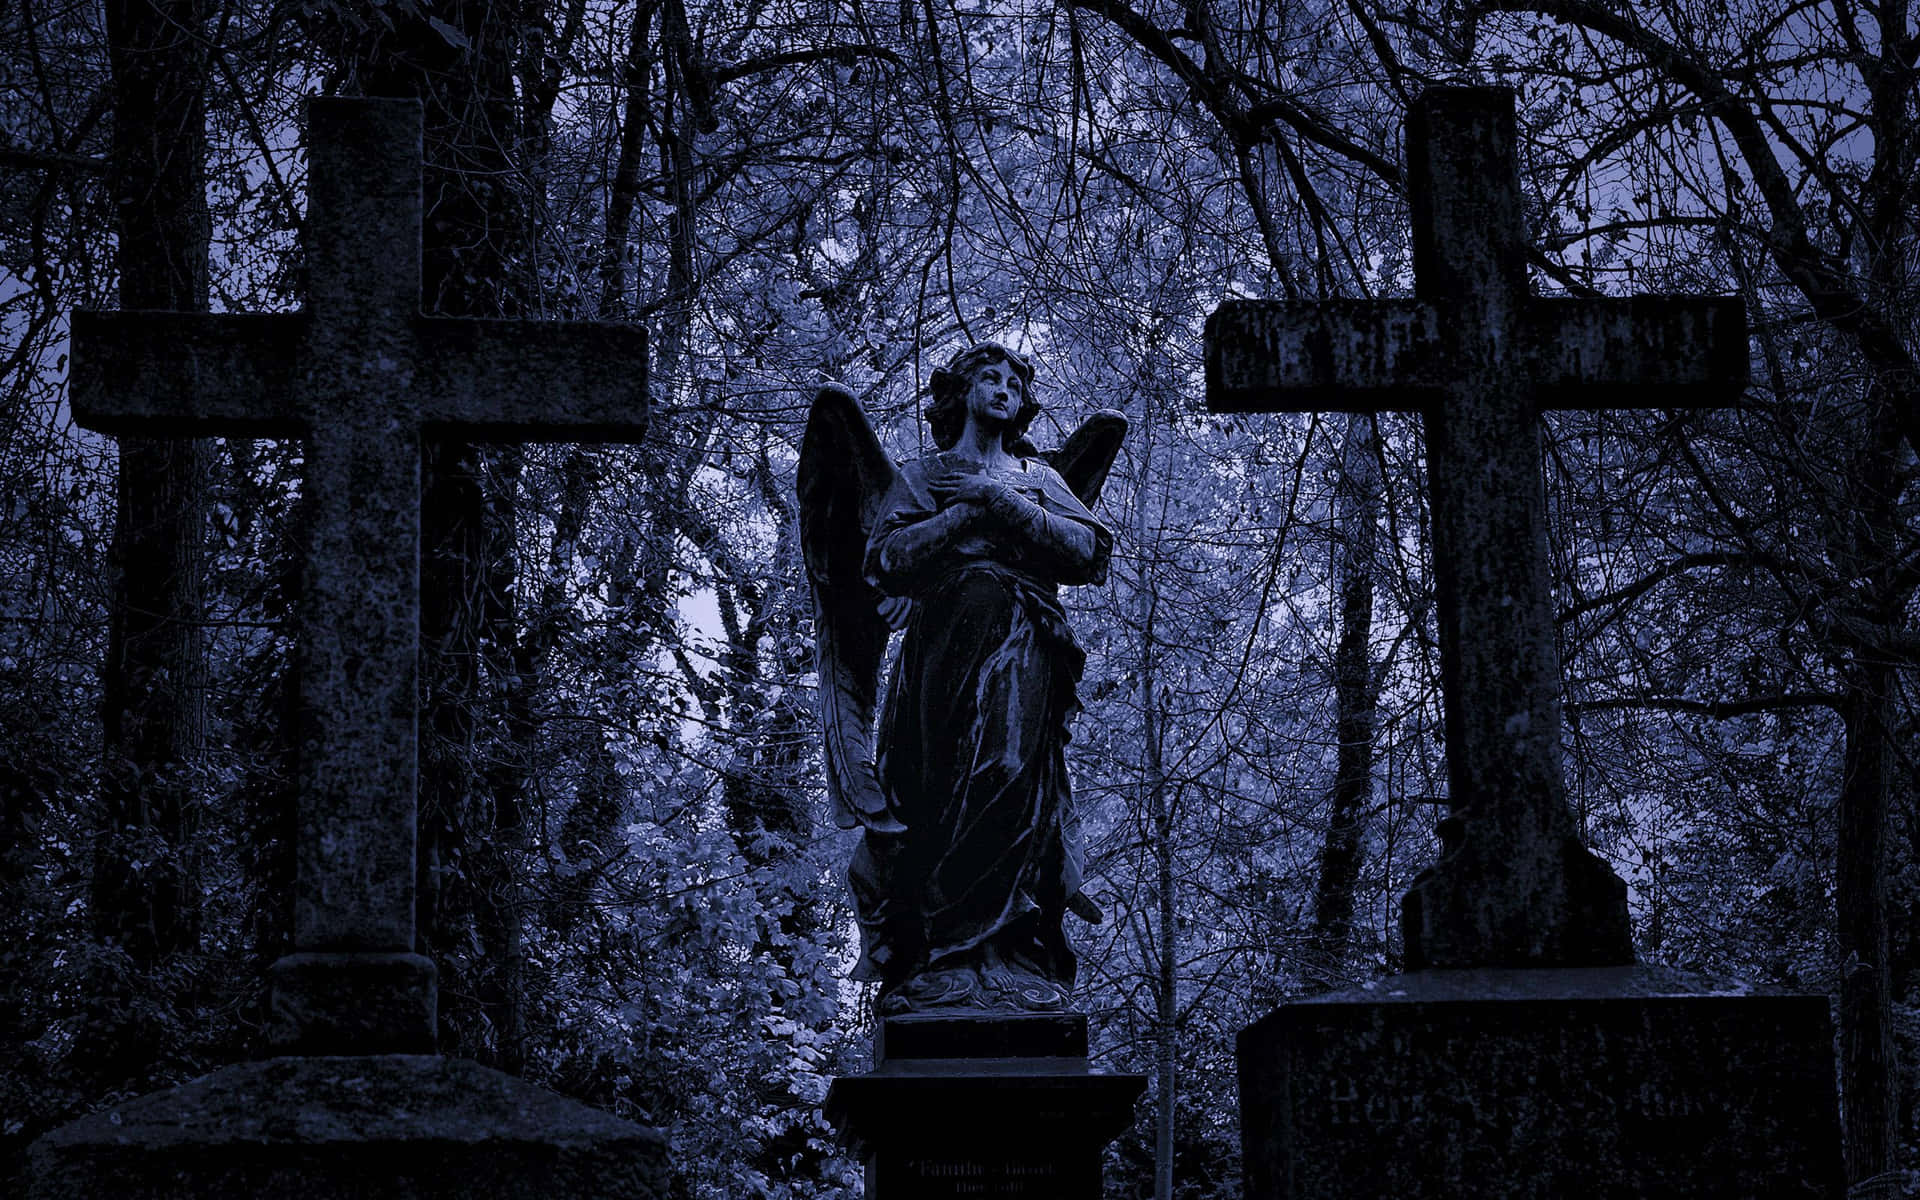 A gloom shrouded graveyard bathed in misty moonlight